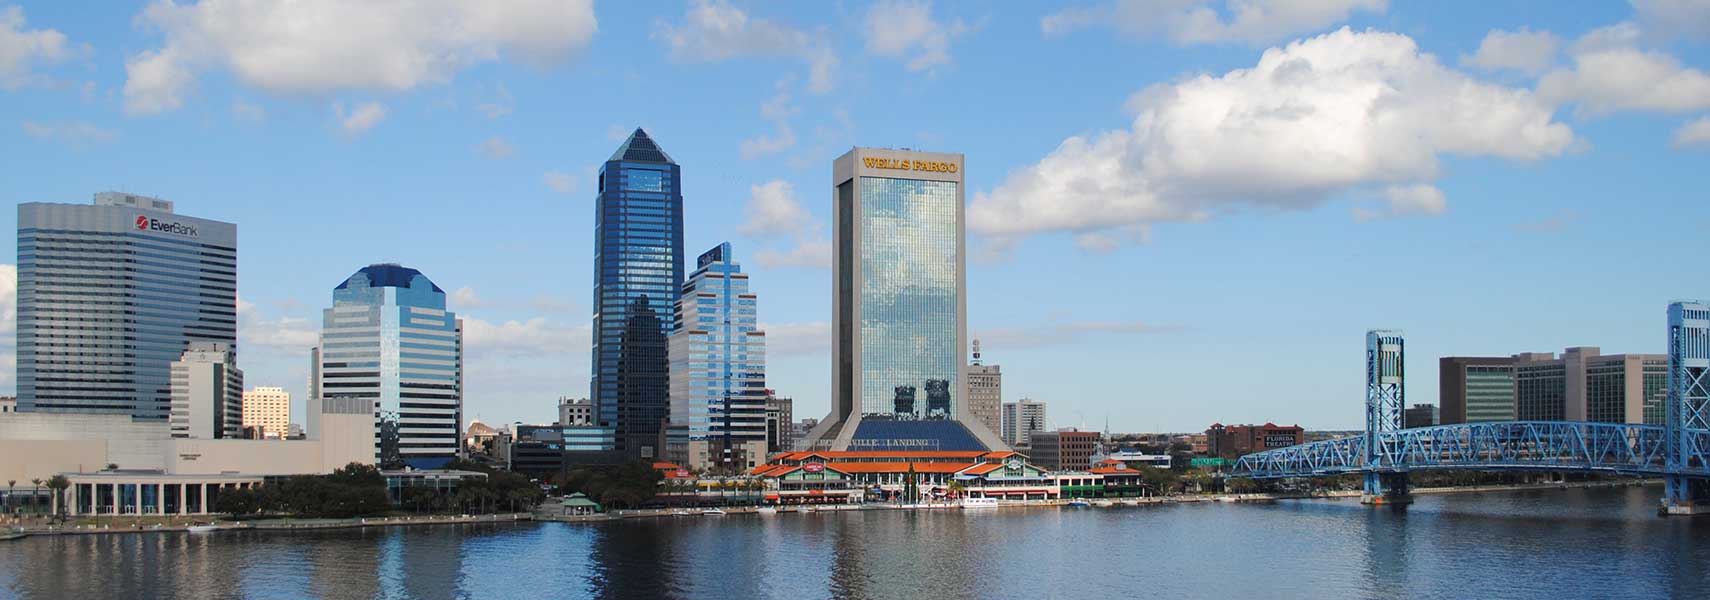 Skyline Jacksonville, Florida with EverBank Center, Jacksonville Landing, SunTrust Tower, Bank of America Tower, Wells Fargo Center and Main Street Bridge